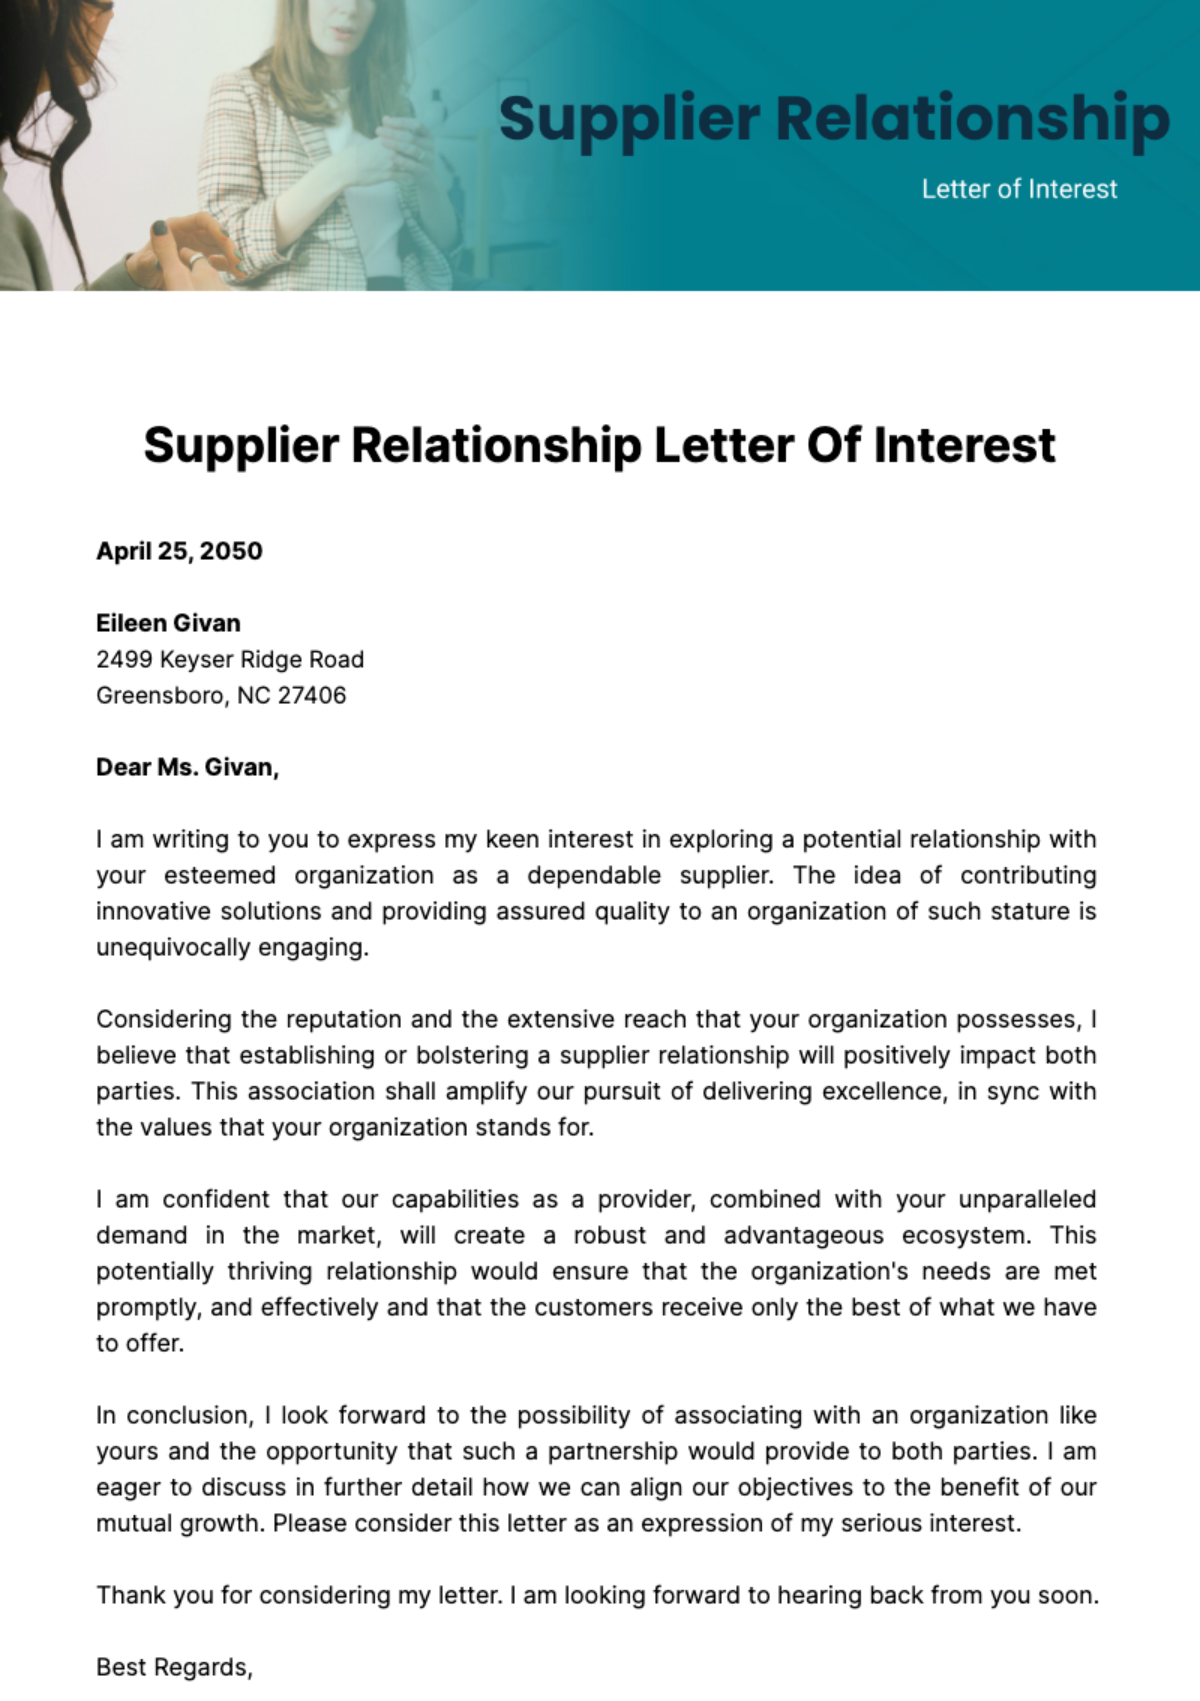 Supplier Relationship Letter Of Interest Template